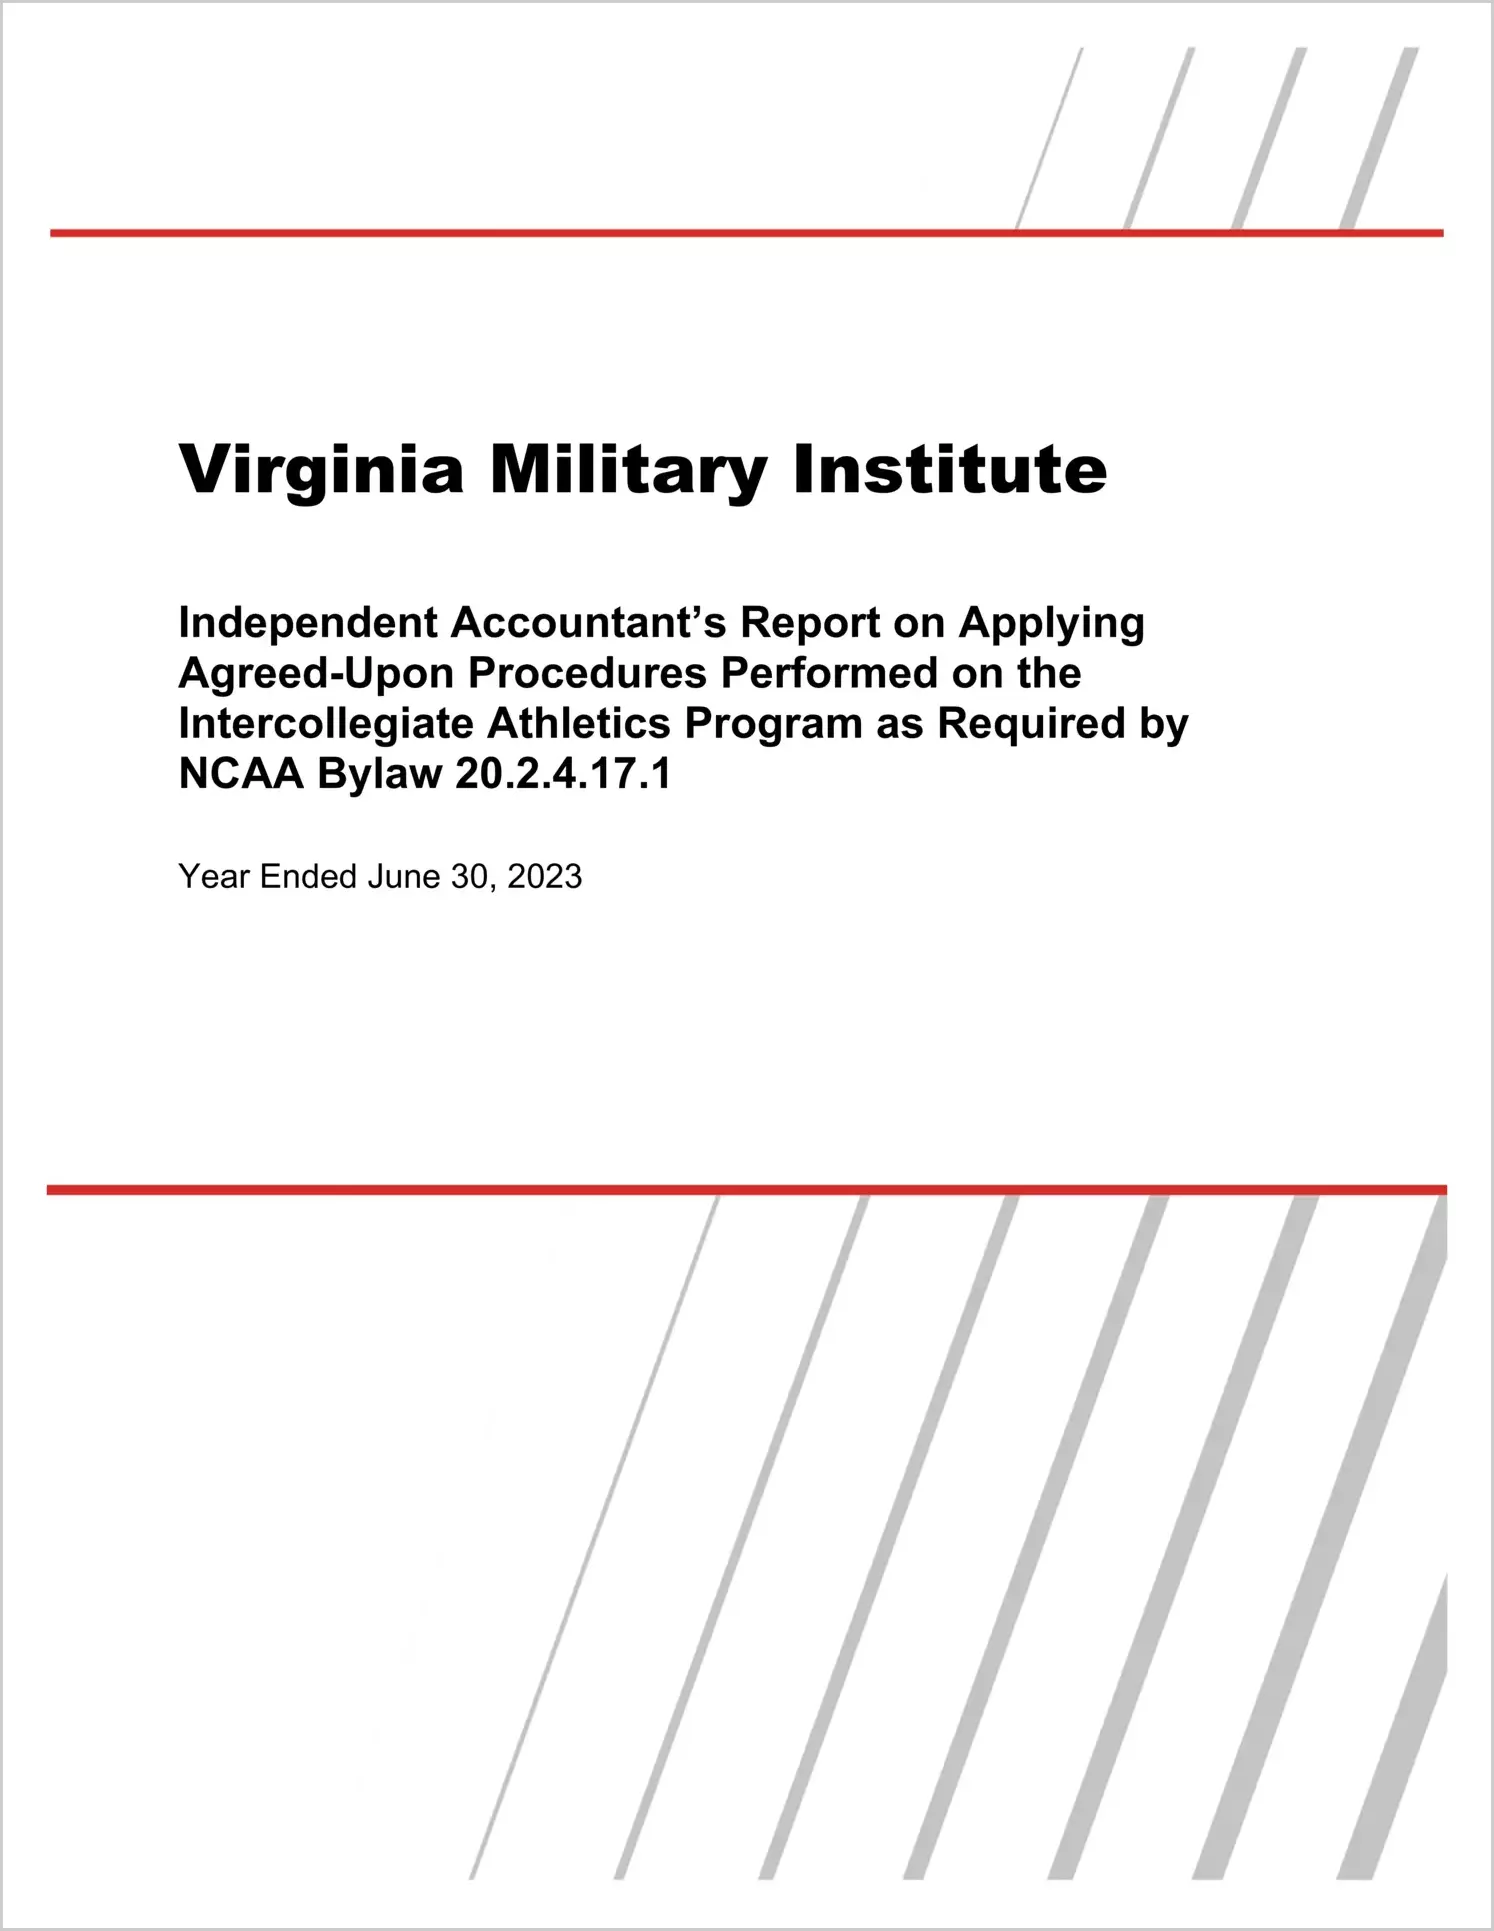 Virginia Military Institute Intercollegiate Athletics Programs for the year ended June 30, 2023